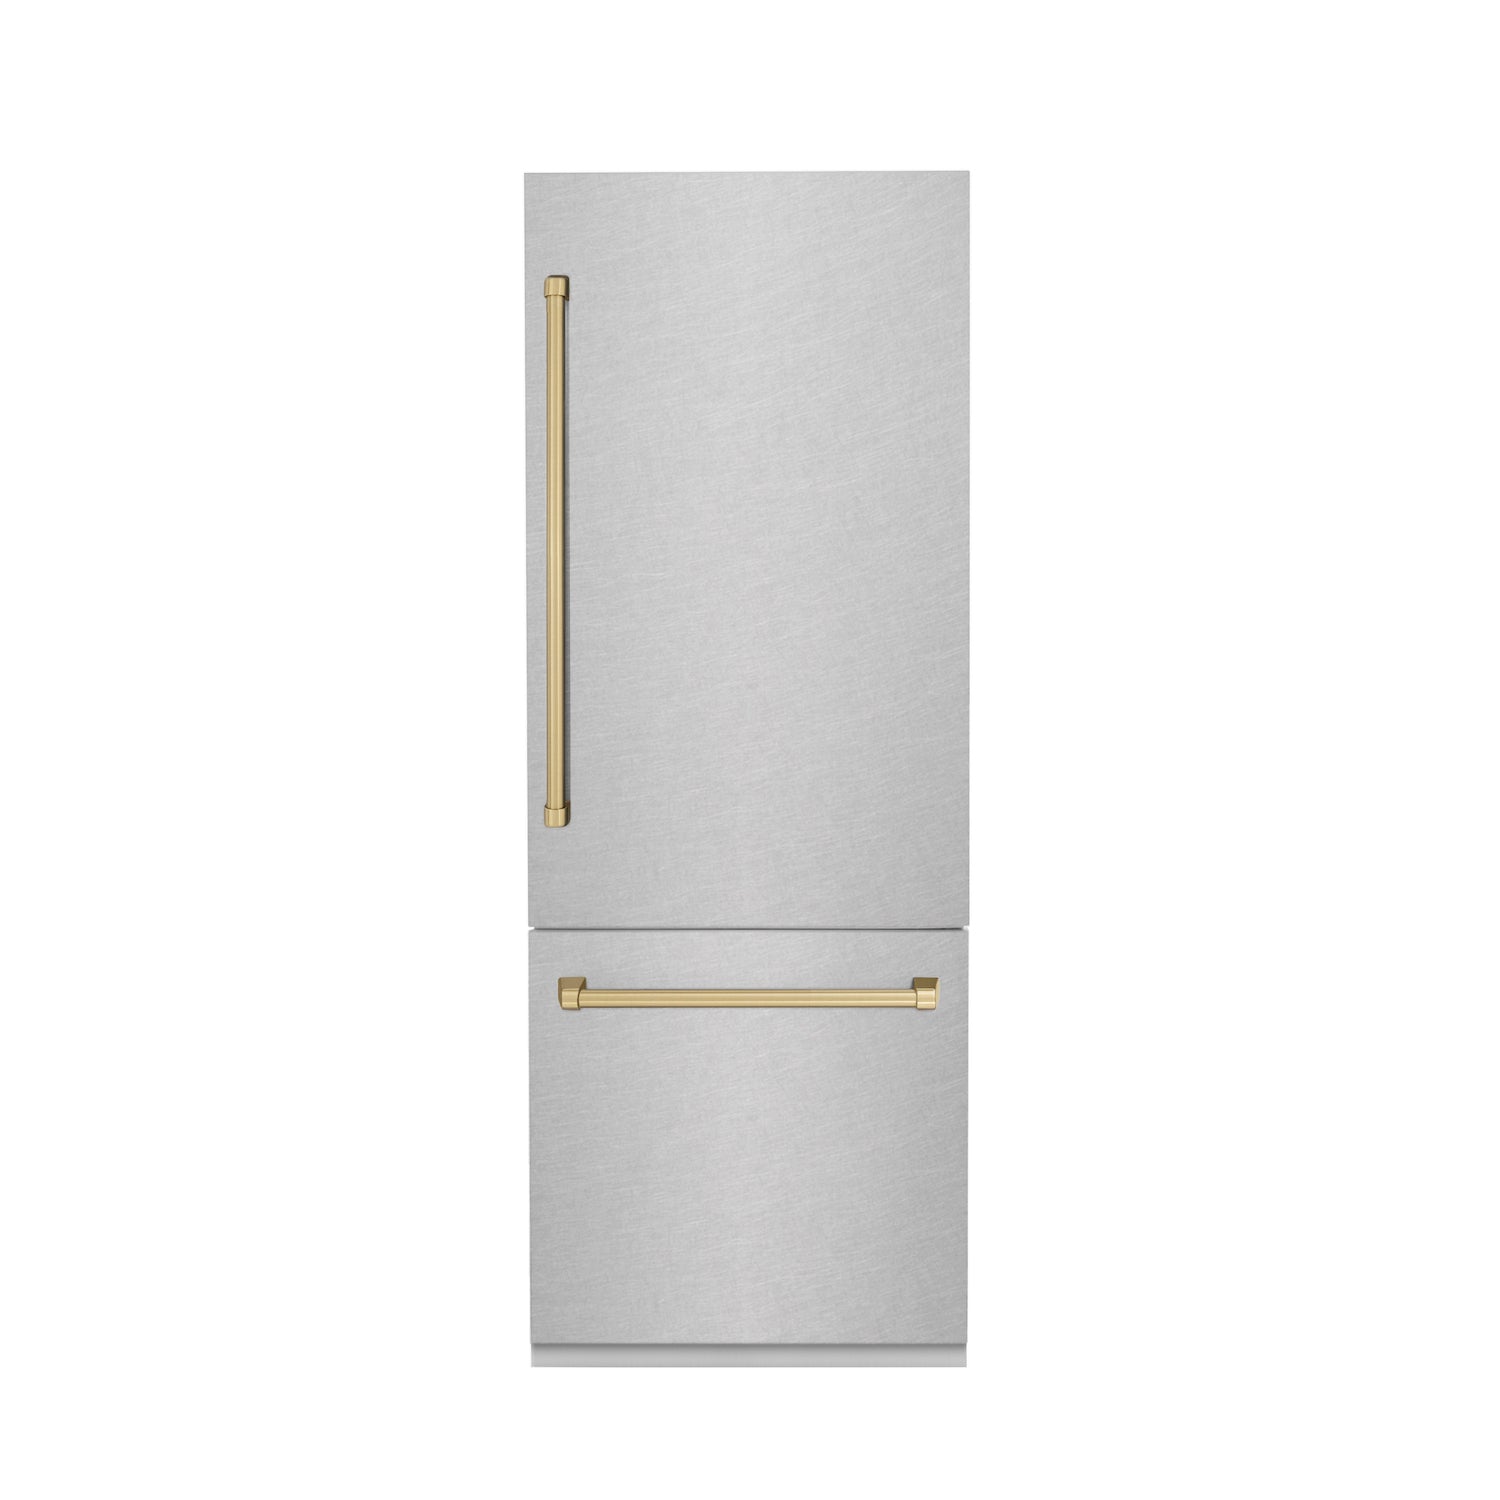 ZLINE 30" Autograph Edition Built-in 2-Door Bottom Freezer Refrigerator - DuraSnow Stainless Steel with Accents, Internal Water and Ice Dispenser